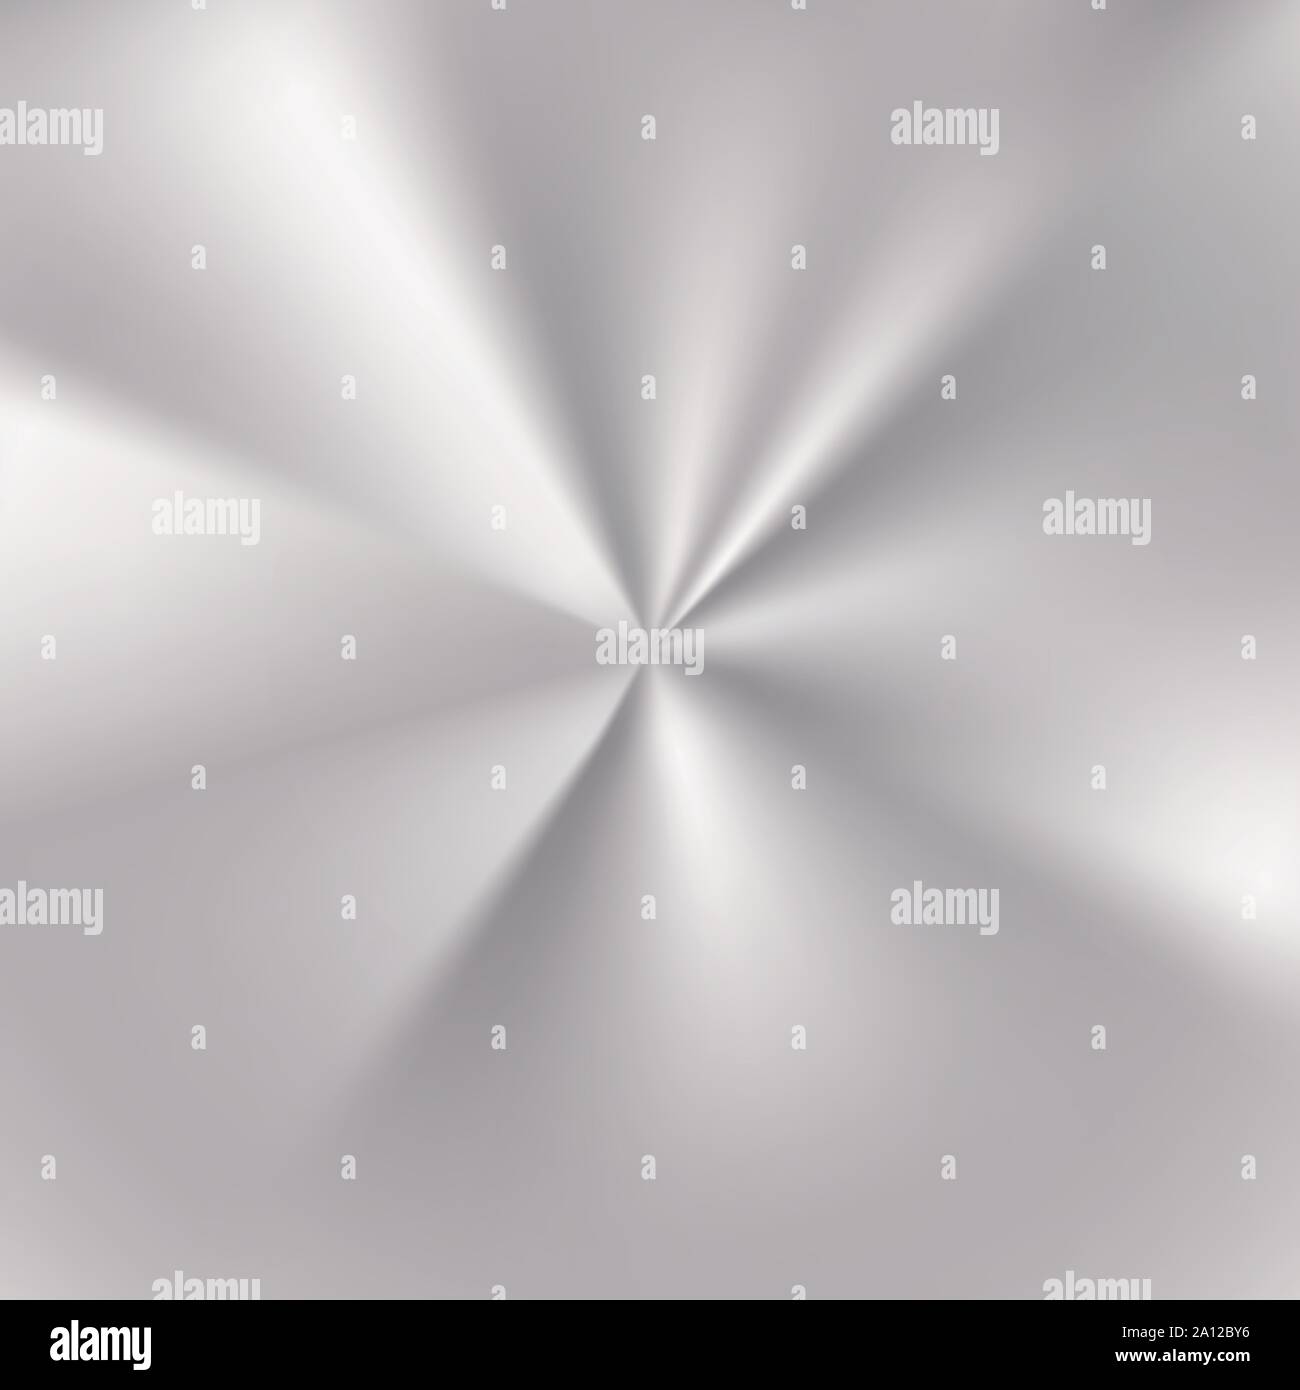 Silver shiny metallic foil background -Fotos und -Bildmaterial in hoher  Auflösung – Alamy